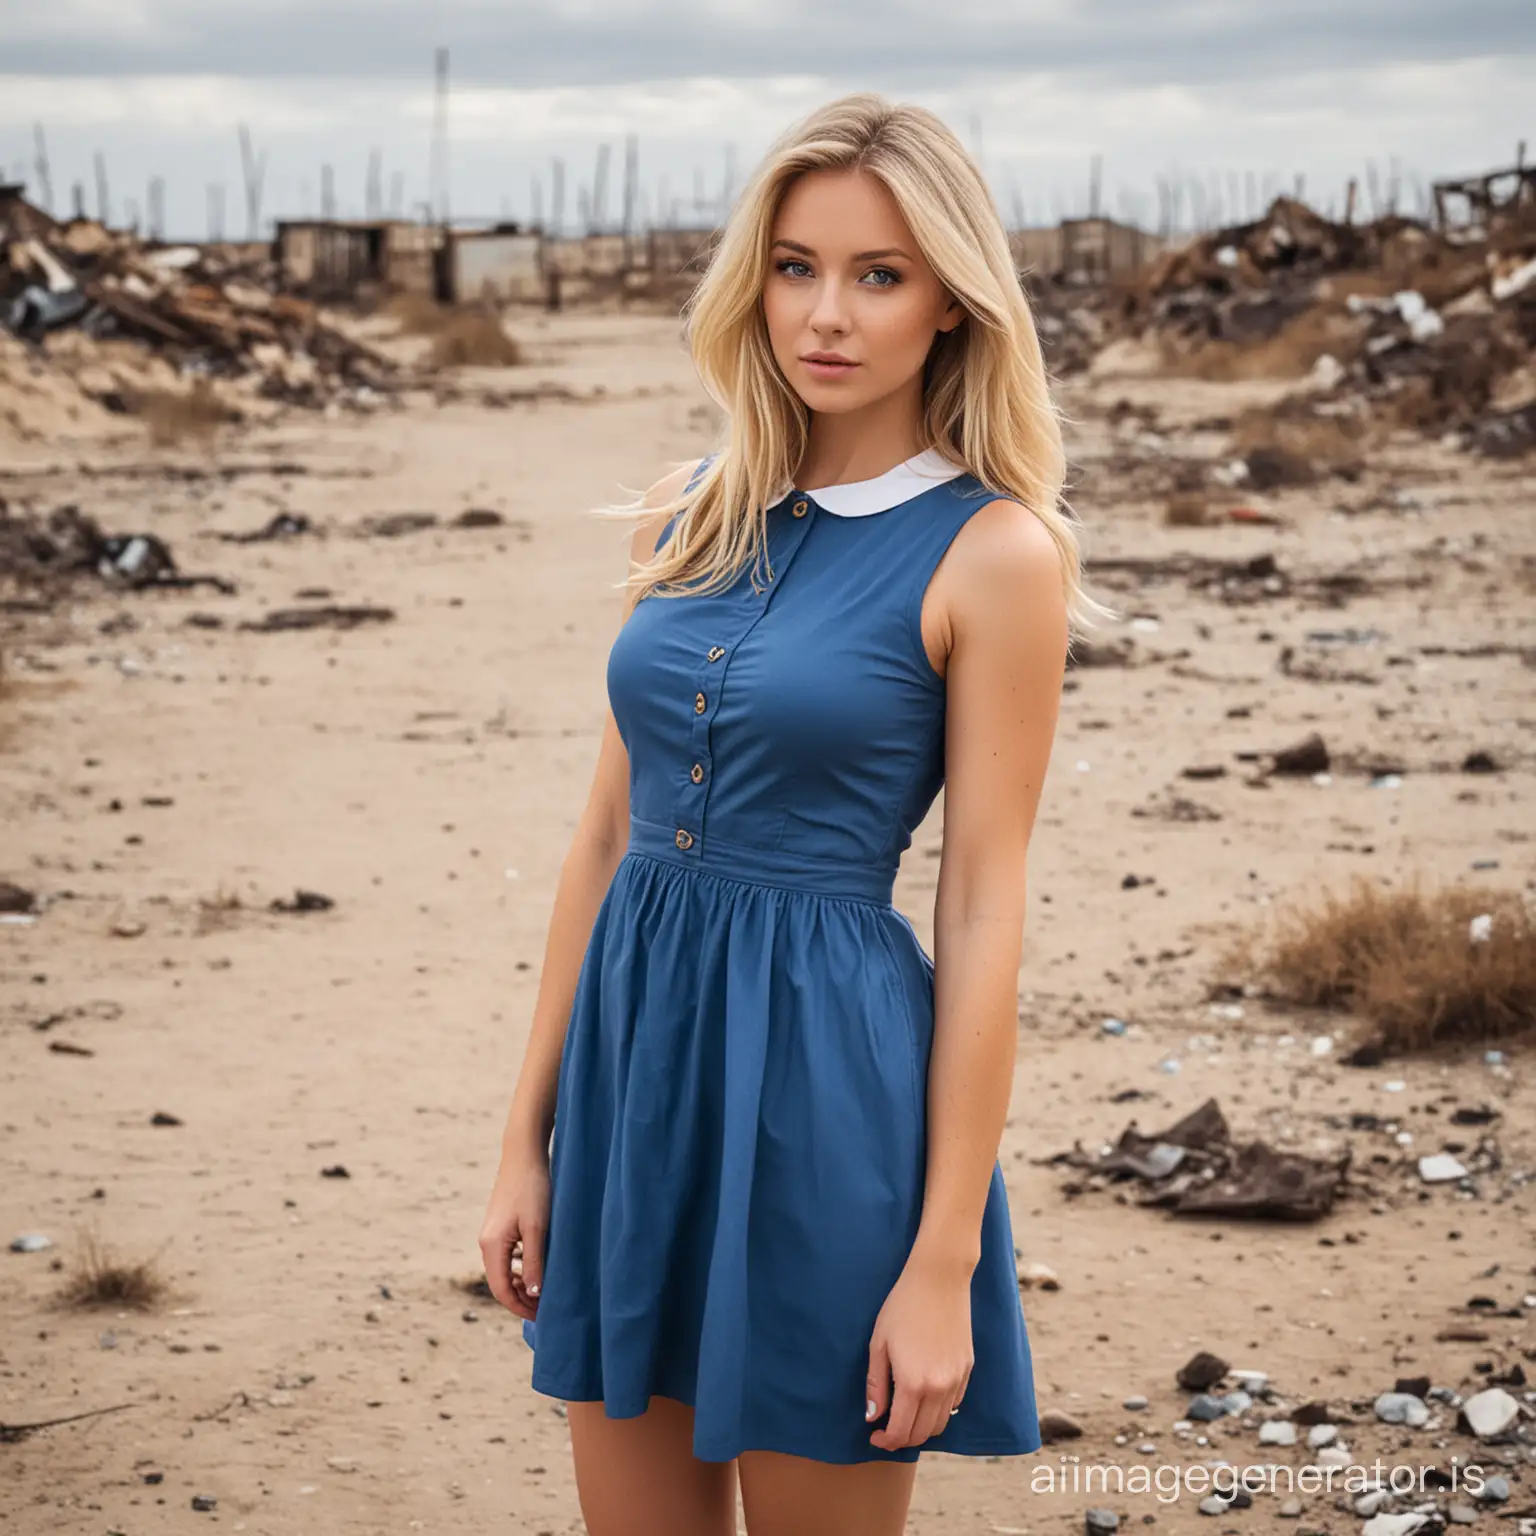 Elegant-Blonde-Woman-in-Blue-Dress-Amidst-Desert-Landscape